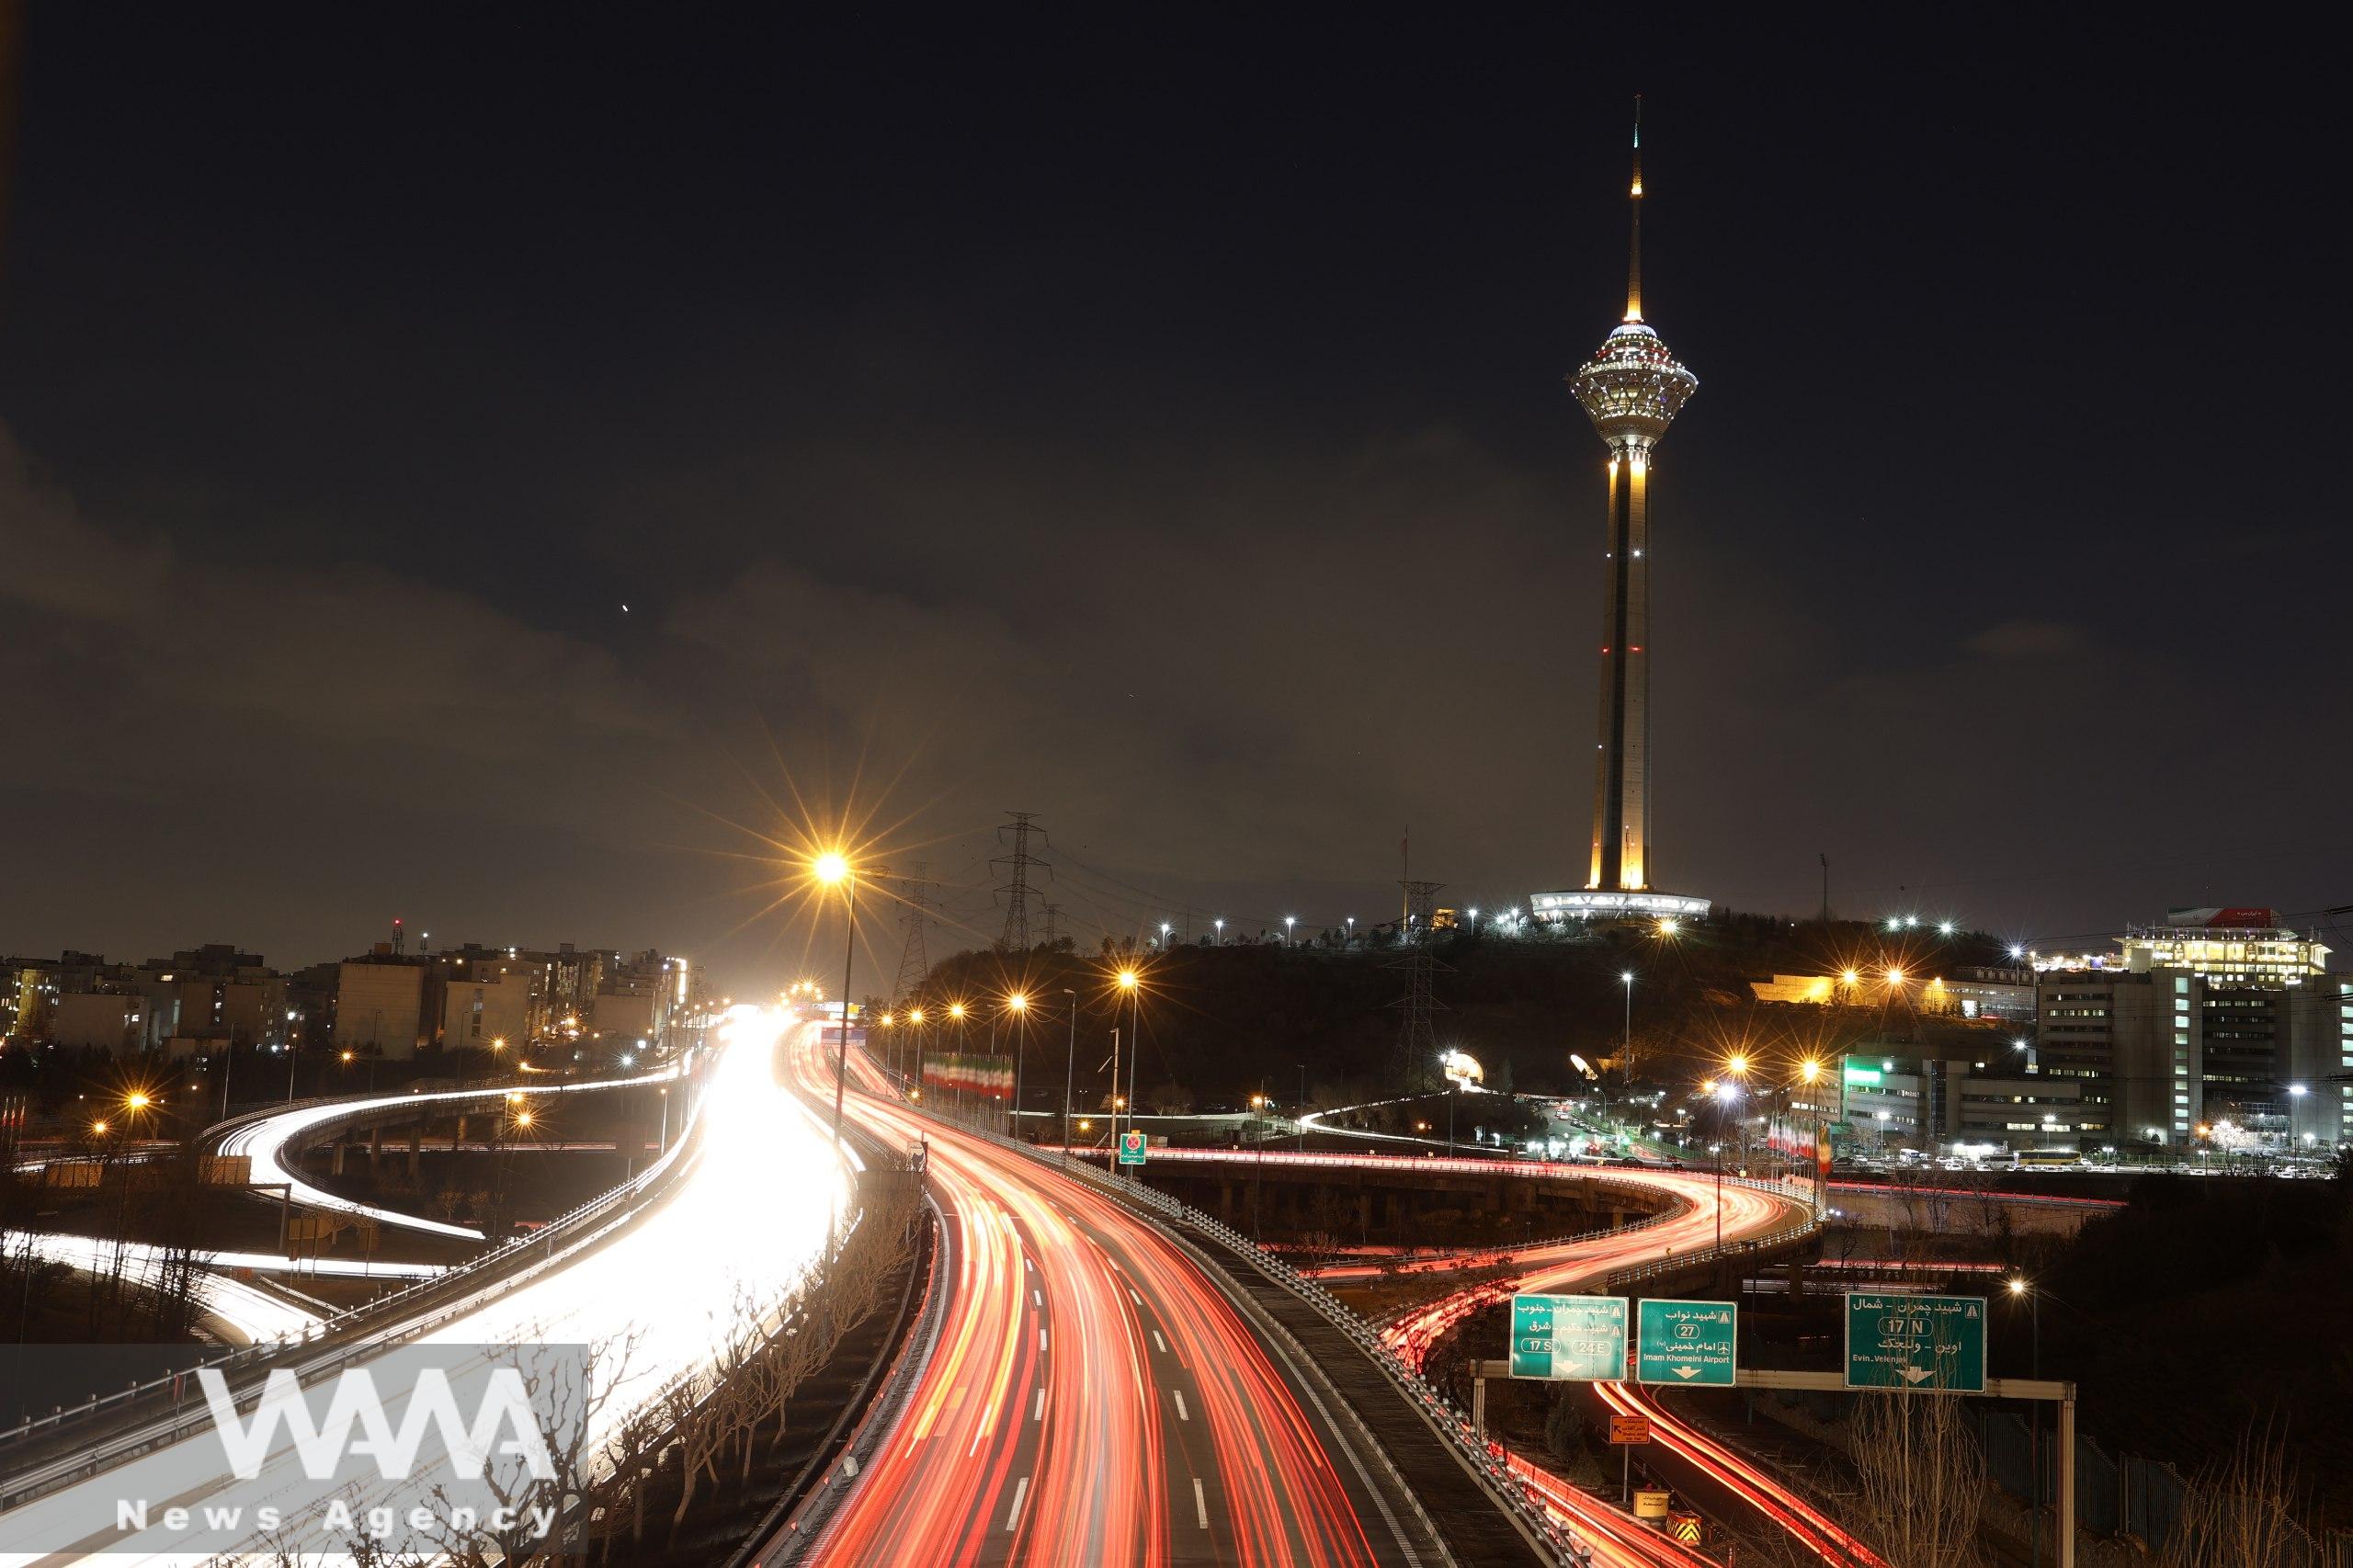 A view of Milad Tower at night - Tehran - Iran - Majid Asgaripour / WANA News Agency